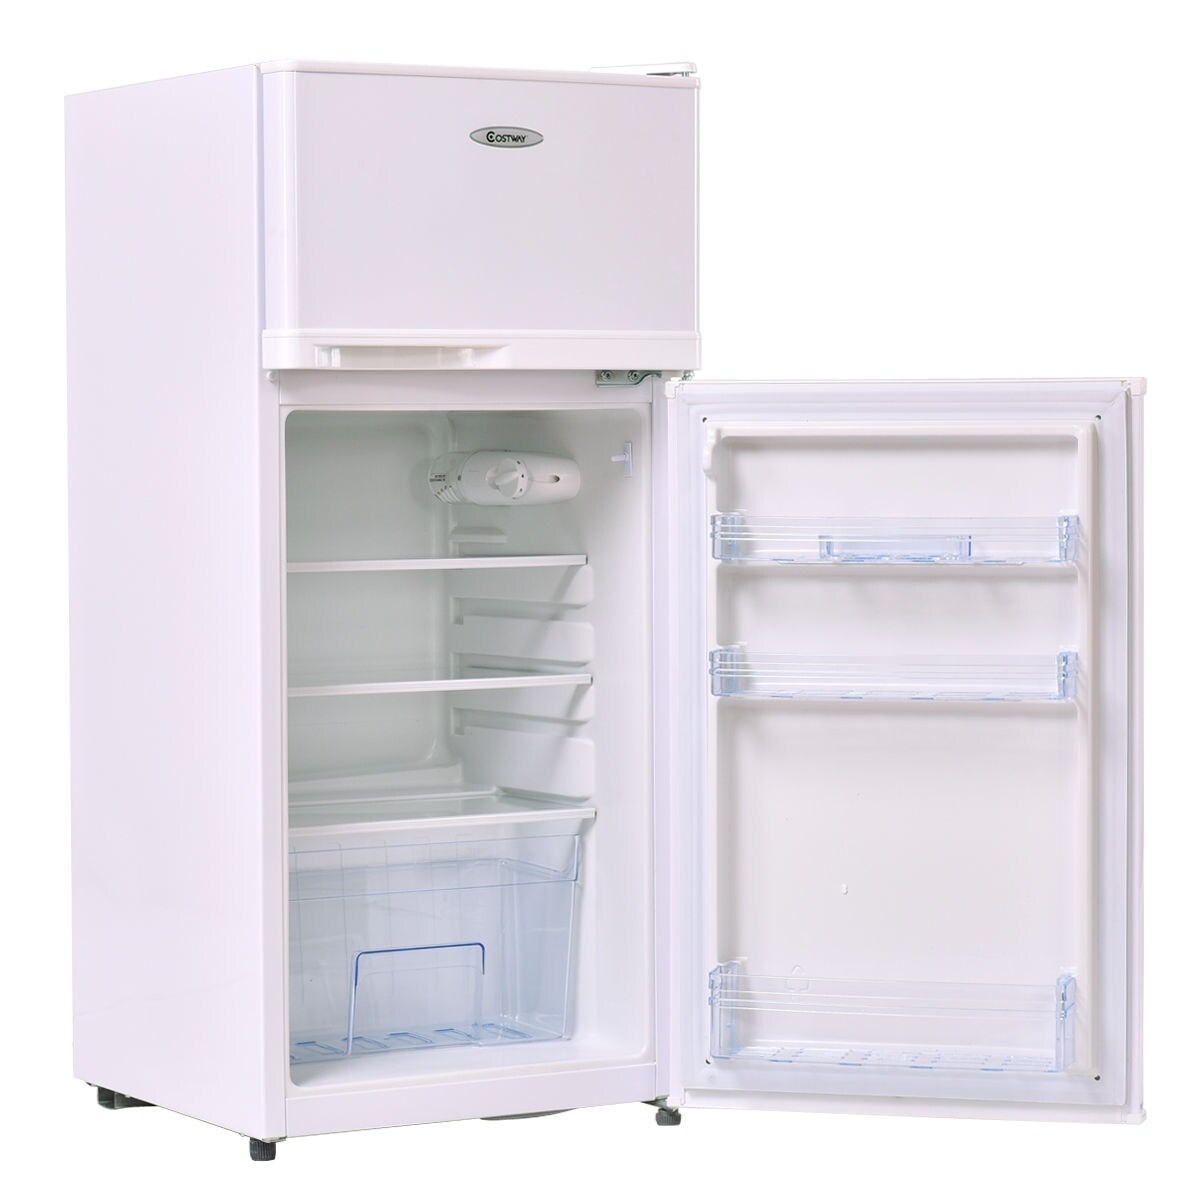  COSTWAY Compact Refrigerator, 3.4 Cu. Ft. Classic Fridge with  Adjustable Removable Glass Shelves, Mechanical Control, Recessed Handle,  Fridge Freezer for Dorm, Office, Apartment, White : Appliances